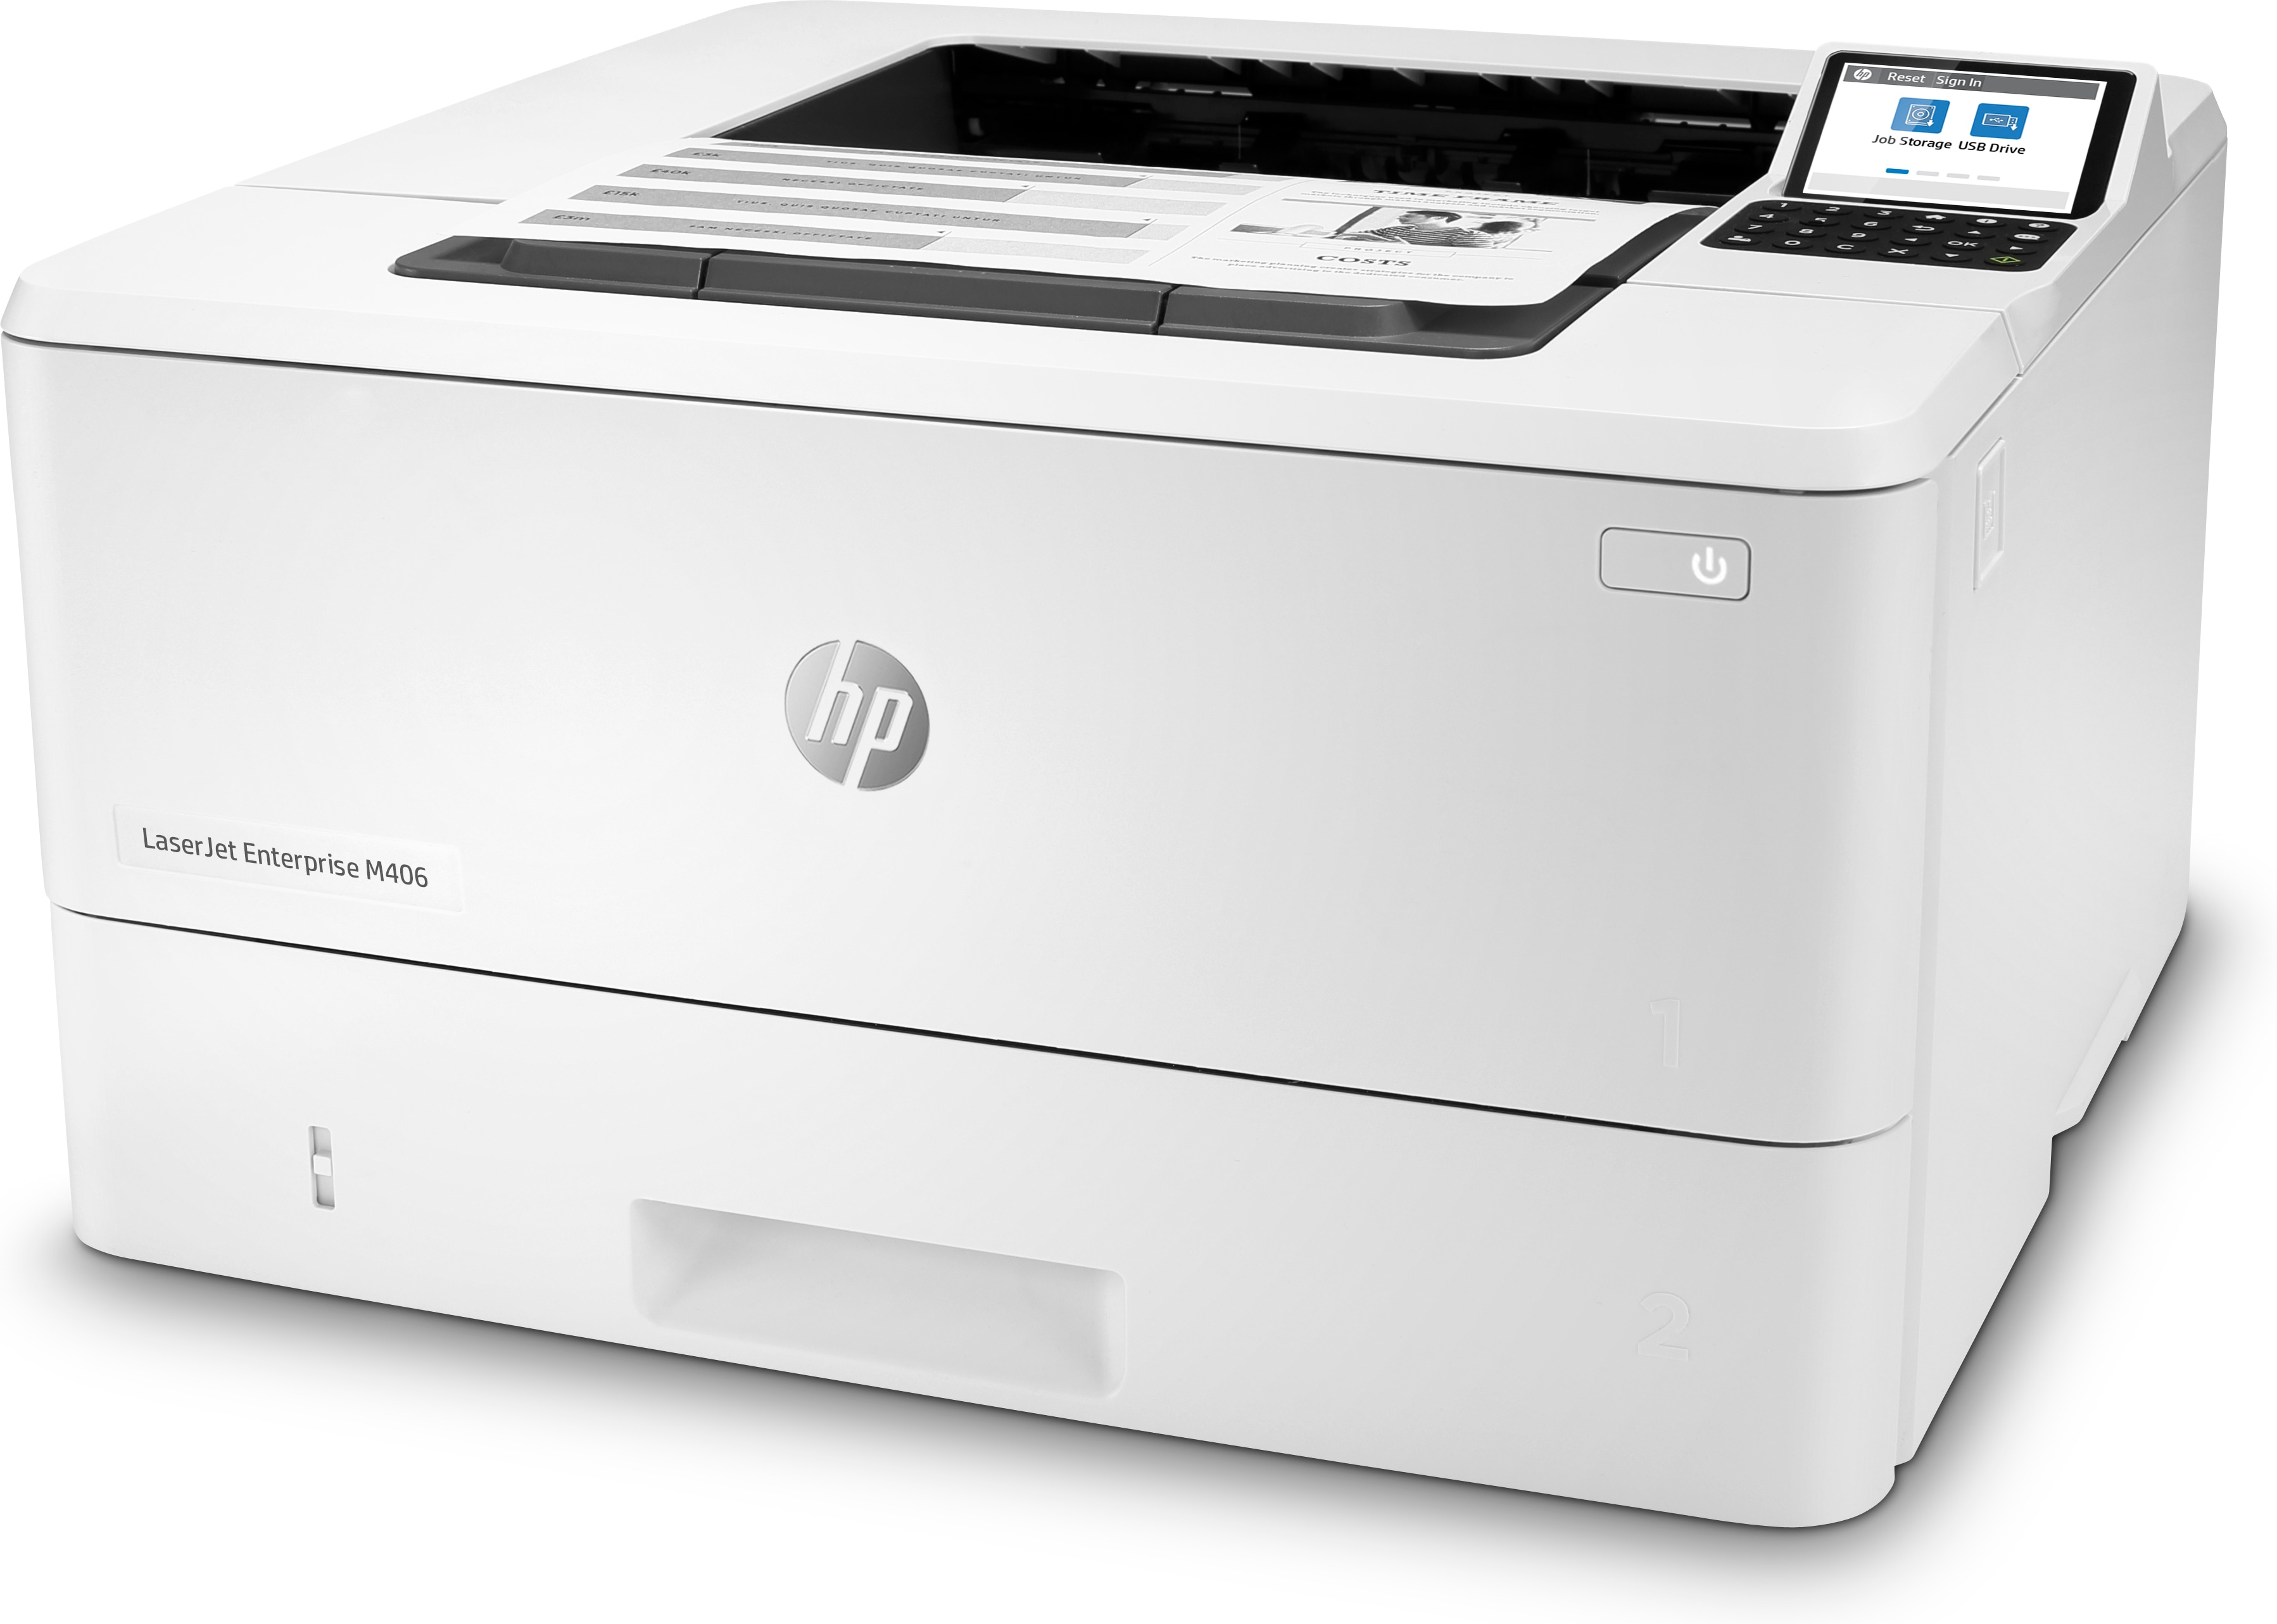 Spausdintuvas Hewlett-Packard LJ Enteprice M406DN A4 Printer BW Lan Duplex